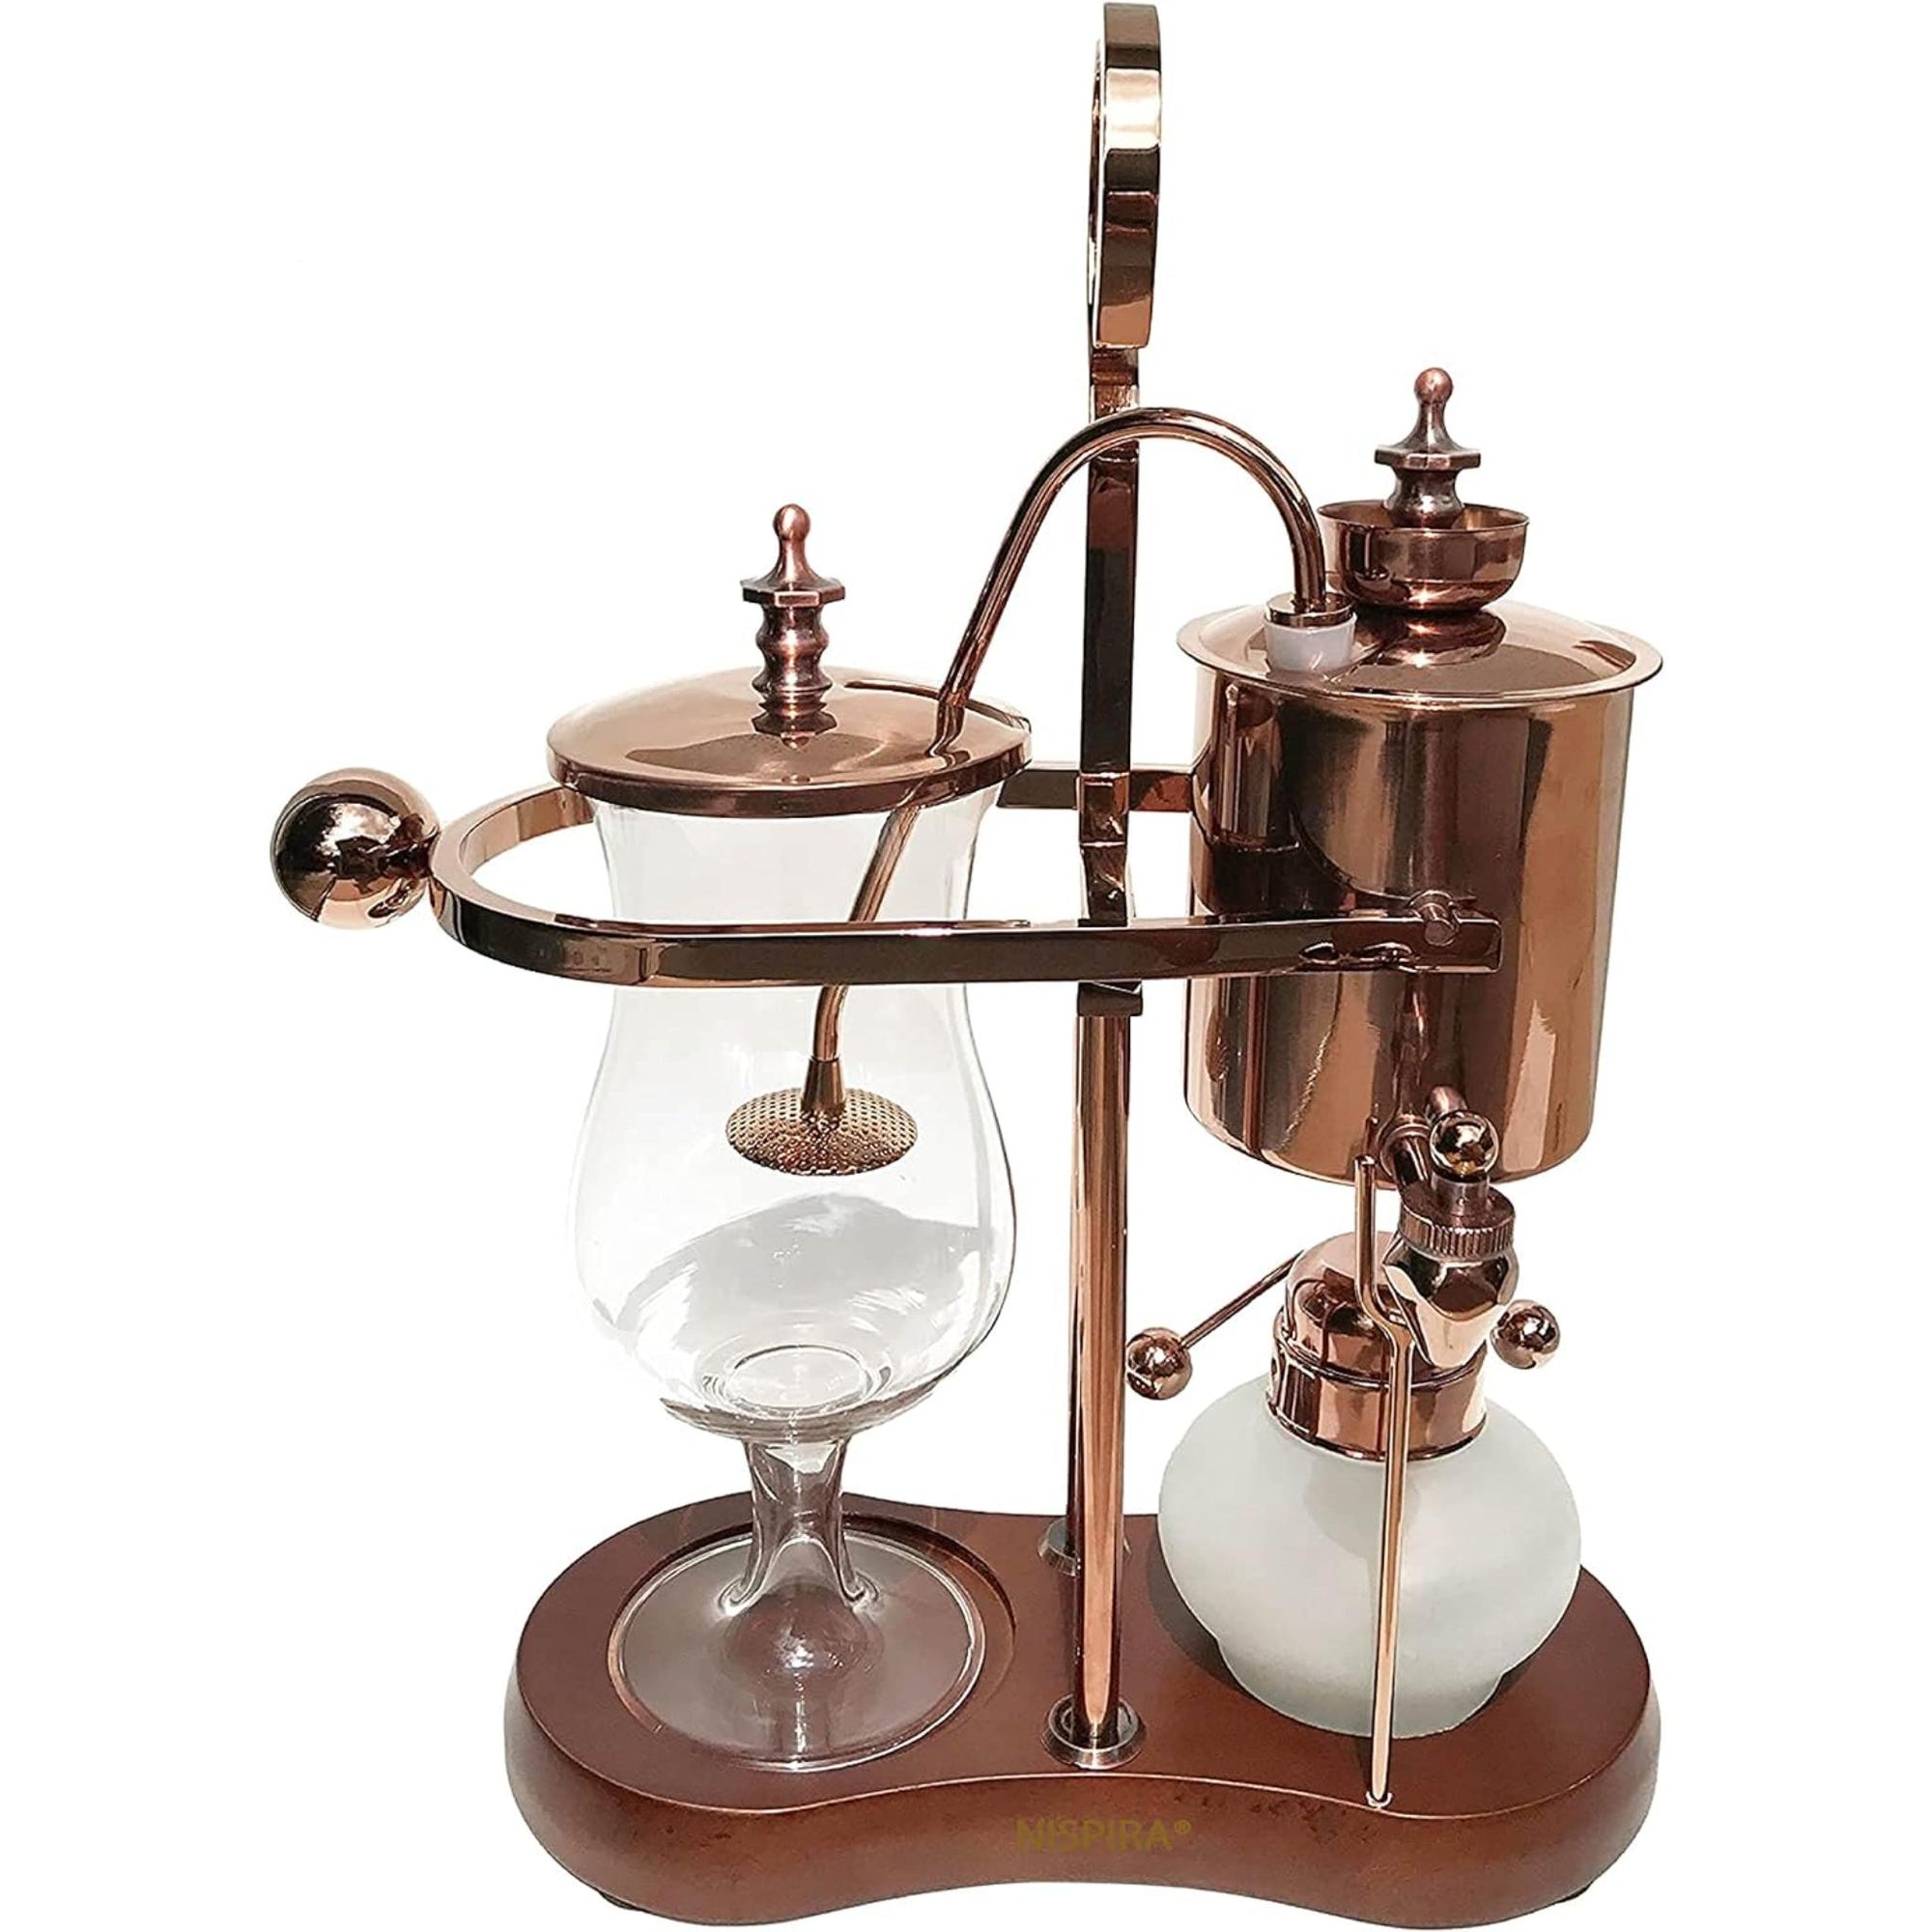 Nispira Vintage Belgium Royal Balance Syphon Siphon Coffee Maker, Copper